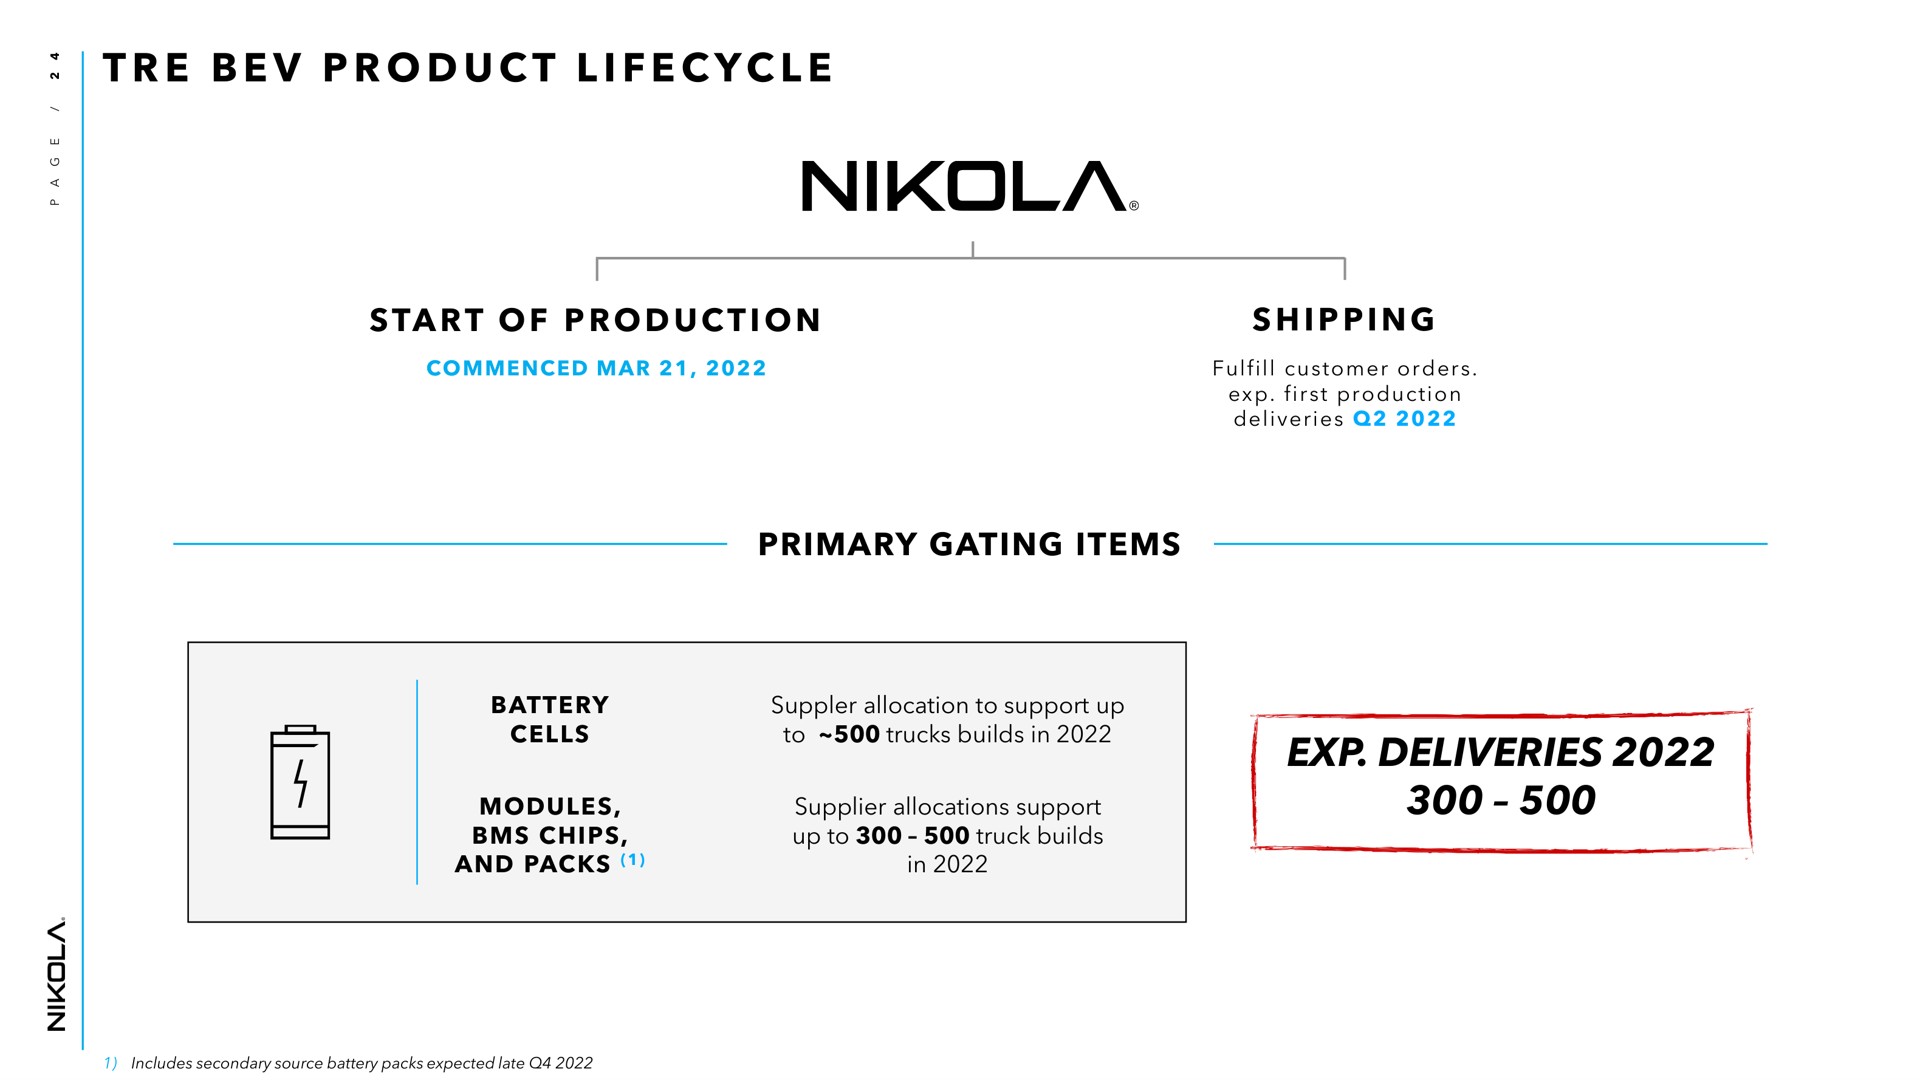 i i i i primary gating items deliveries product start of production shipping | Nikola